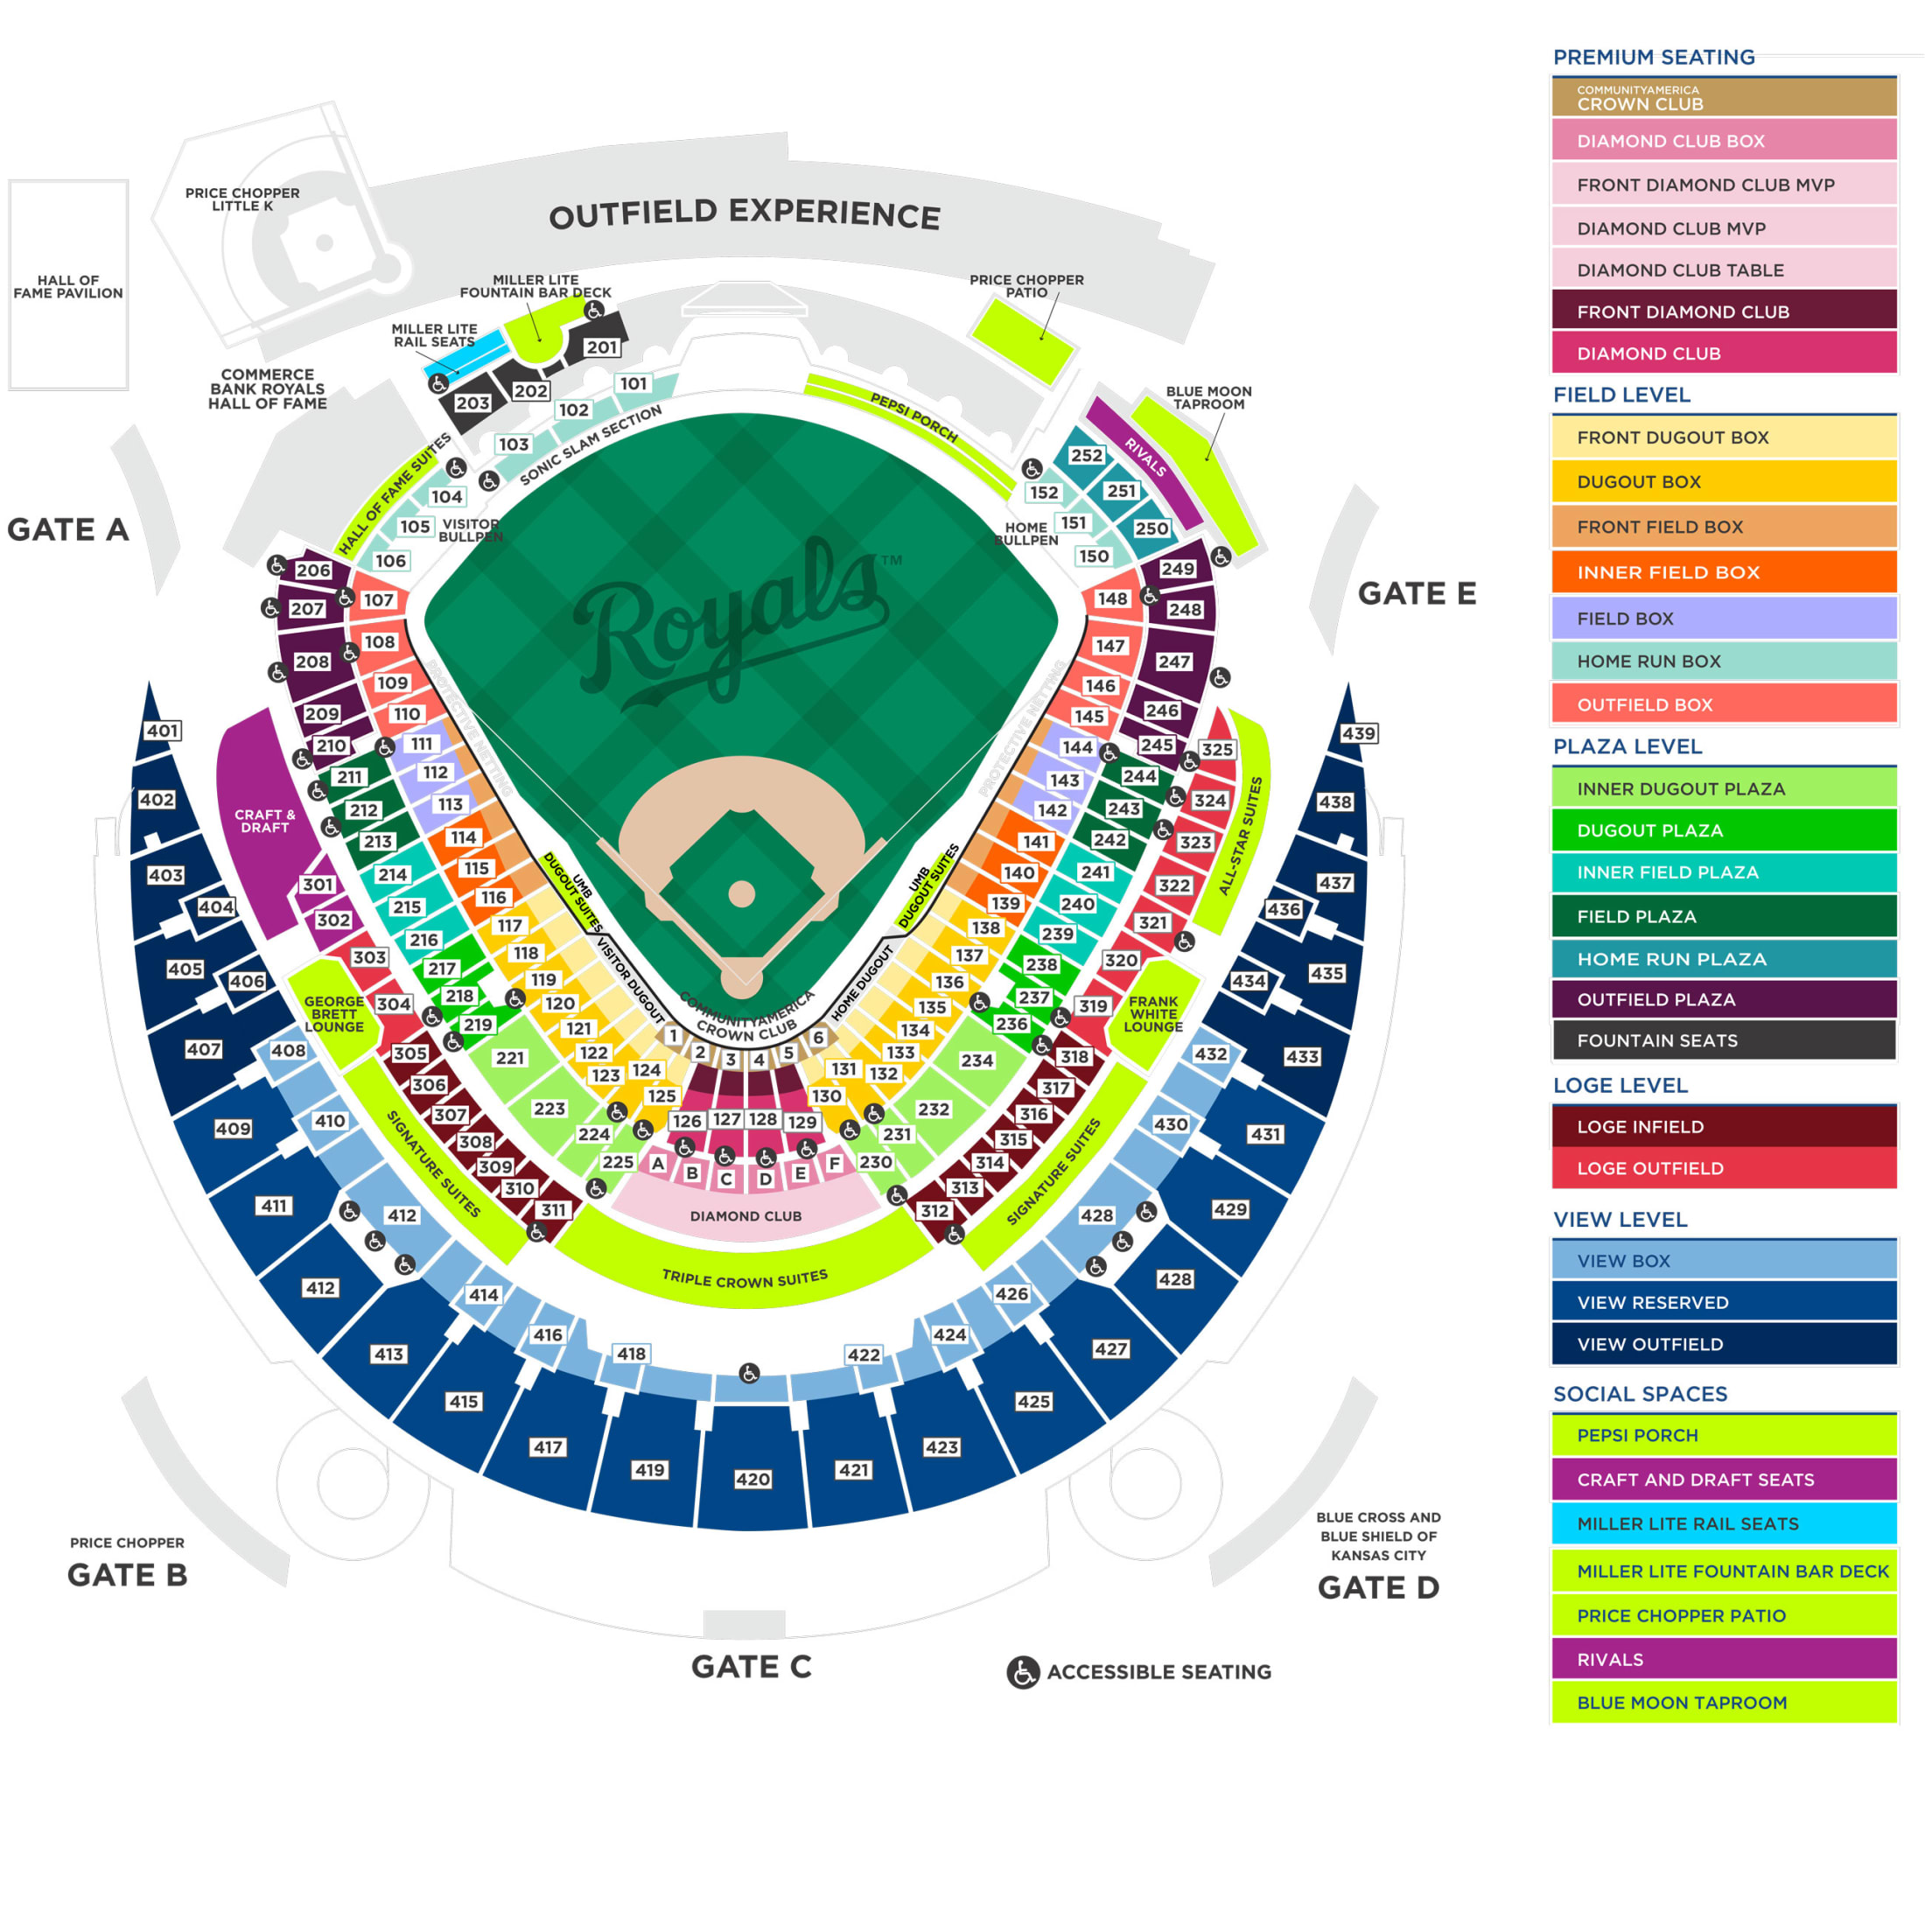 Shaded Seats at Kauffman Stadium - Royals Tickets in the Shade